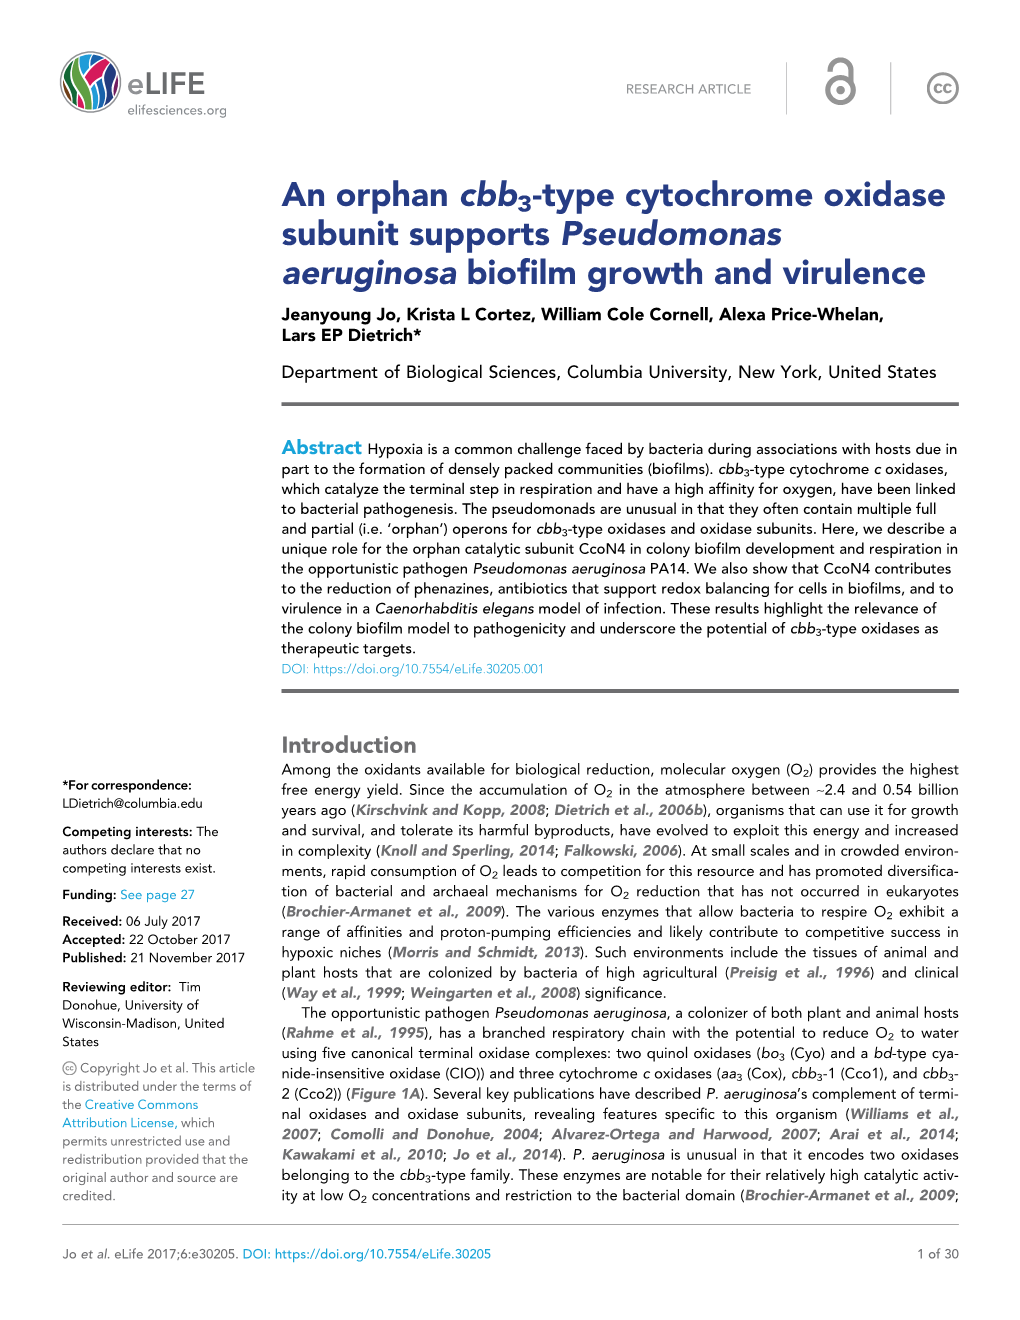 An Orphan Cbb3-Type Cytochrome Oxidase Subunit Supports Pseudomonas Aeruginosa Biofilm Growth and Virulence